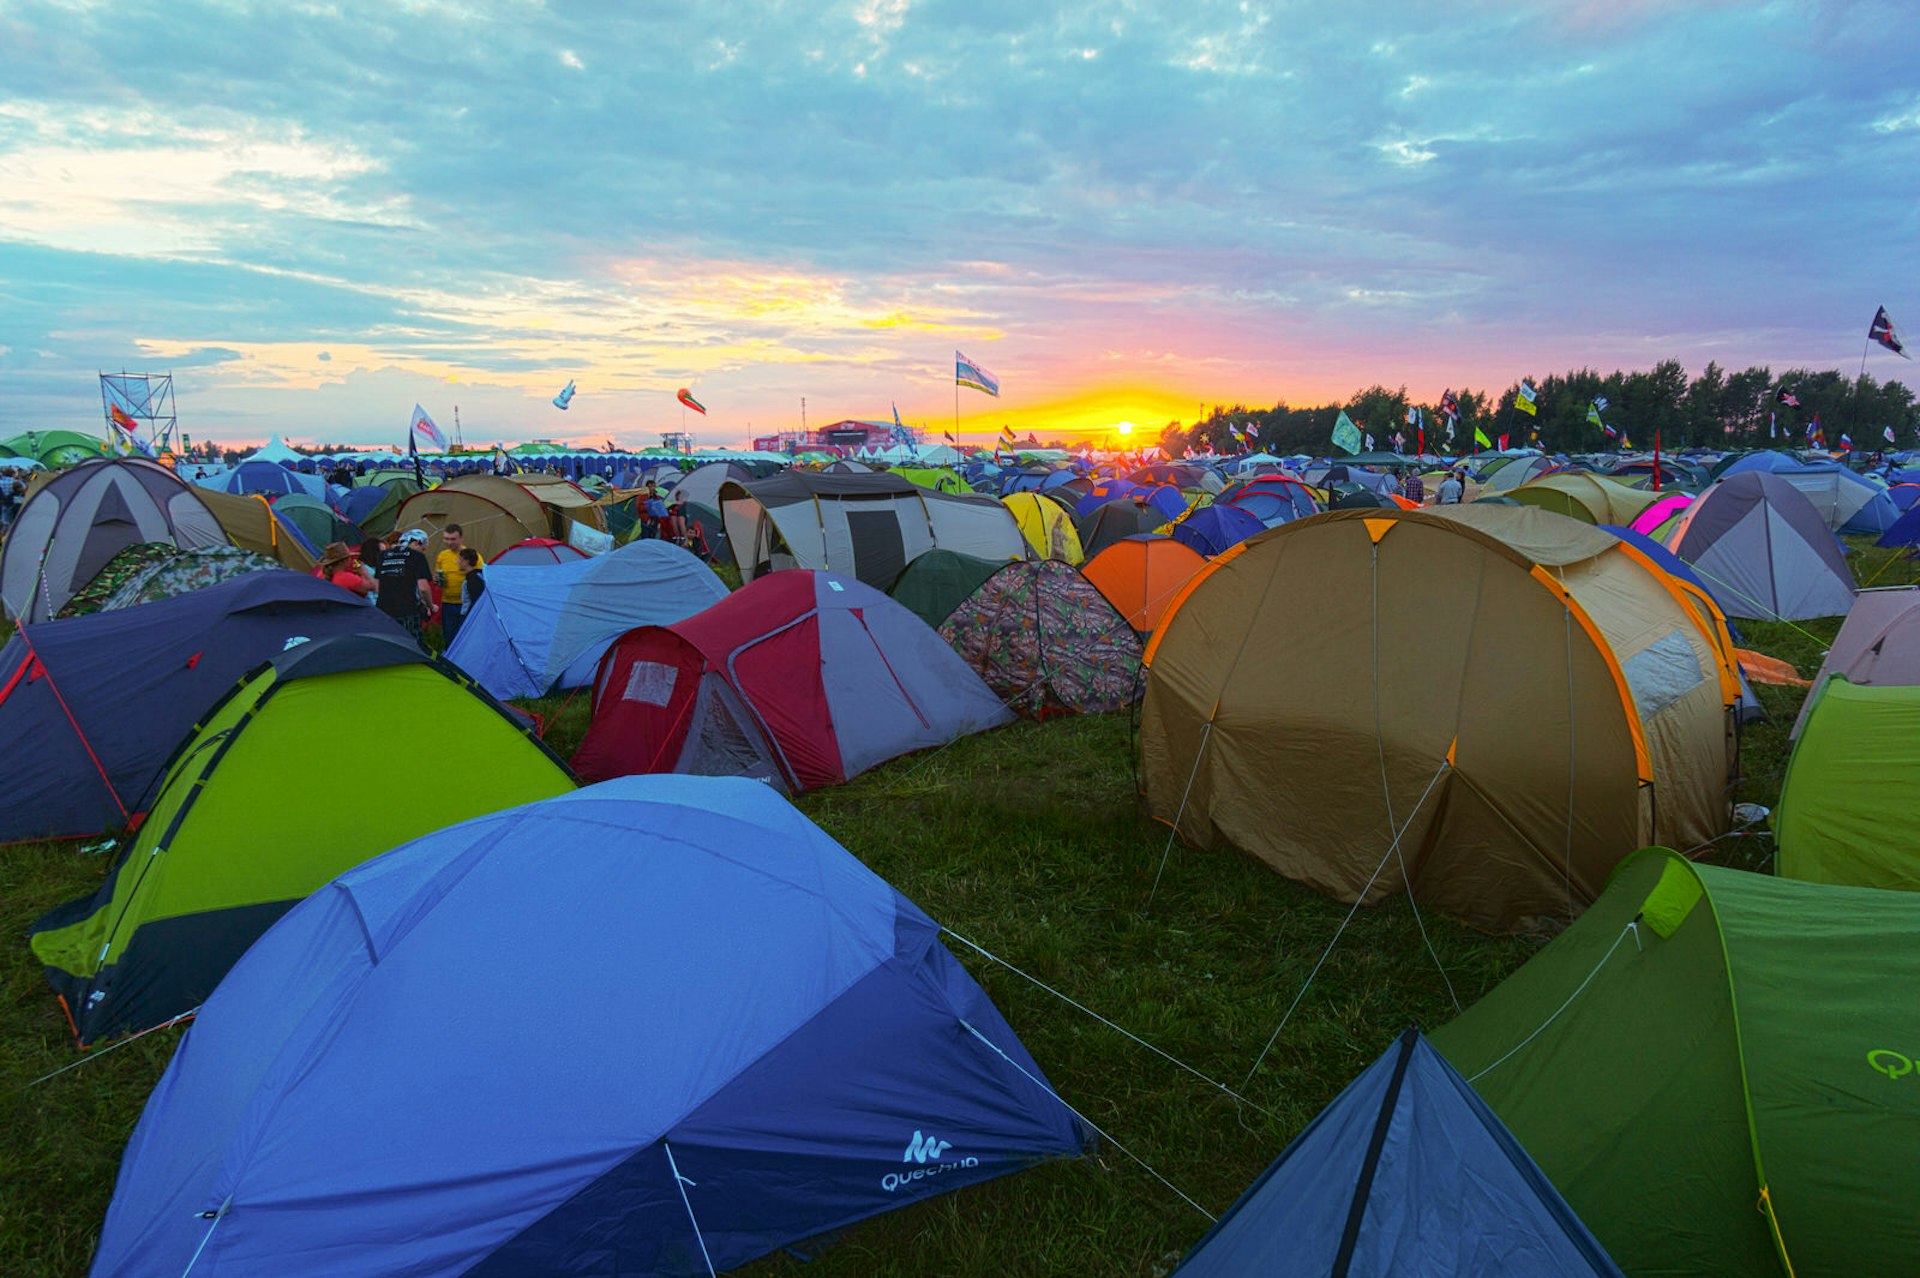 A field full of tents at a festival at sunset © Anton Gvozdikov / Shutterstock